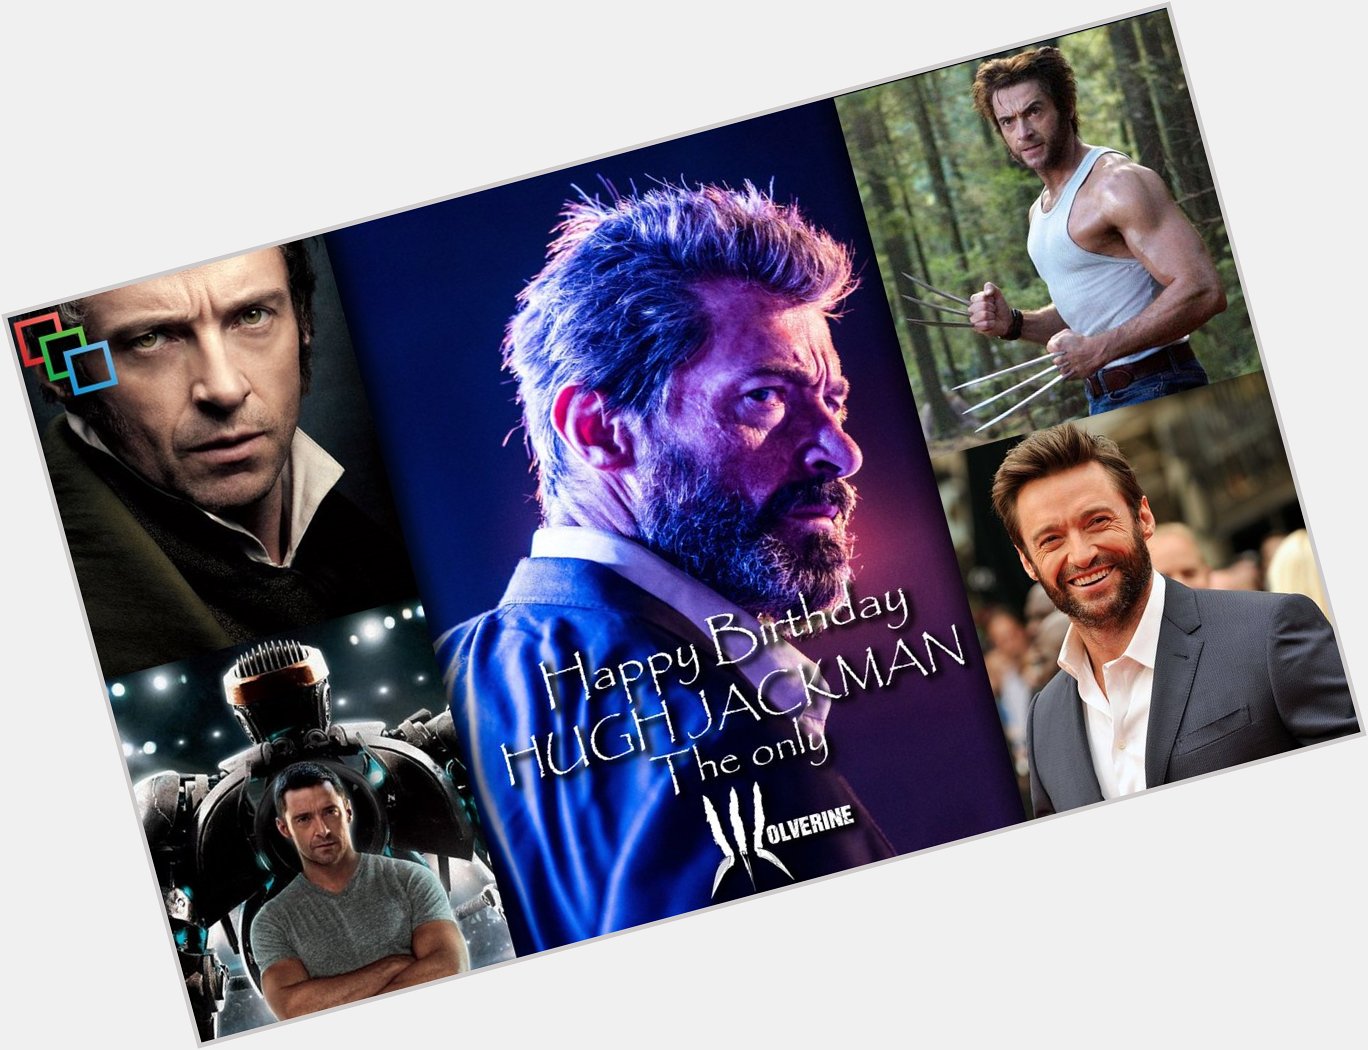 Frames Film Festival wishes the Wolverine, Mr. Hugh Jackman a very happy birthday.  